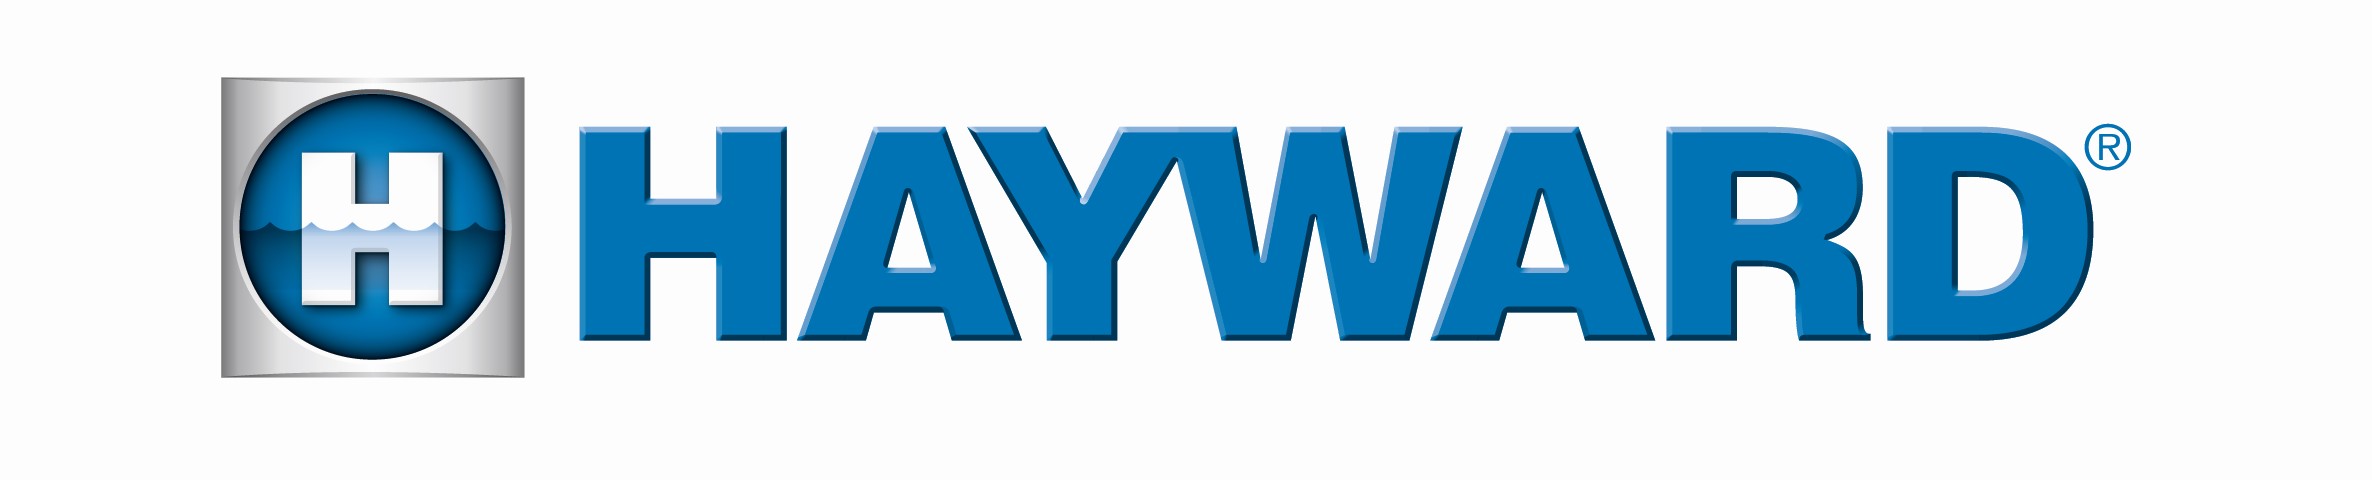 Hayward Logo.jpg